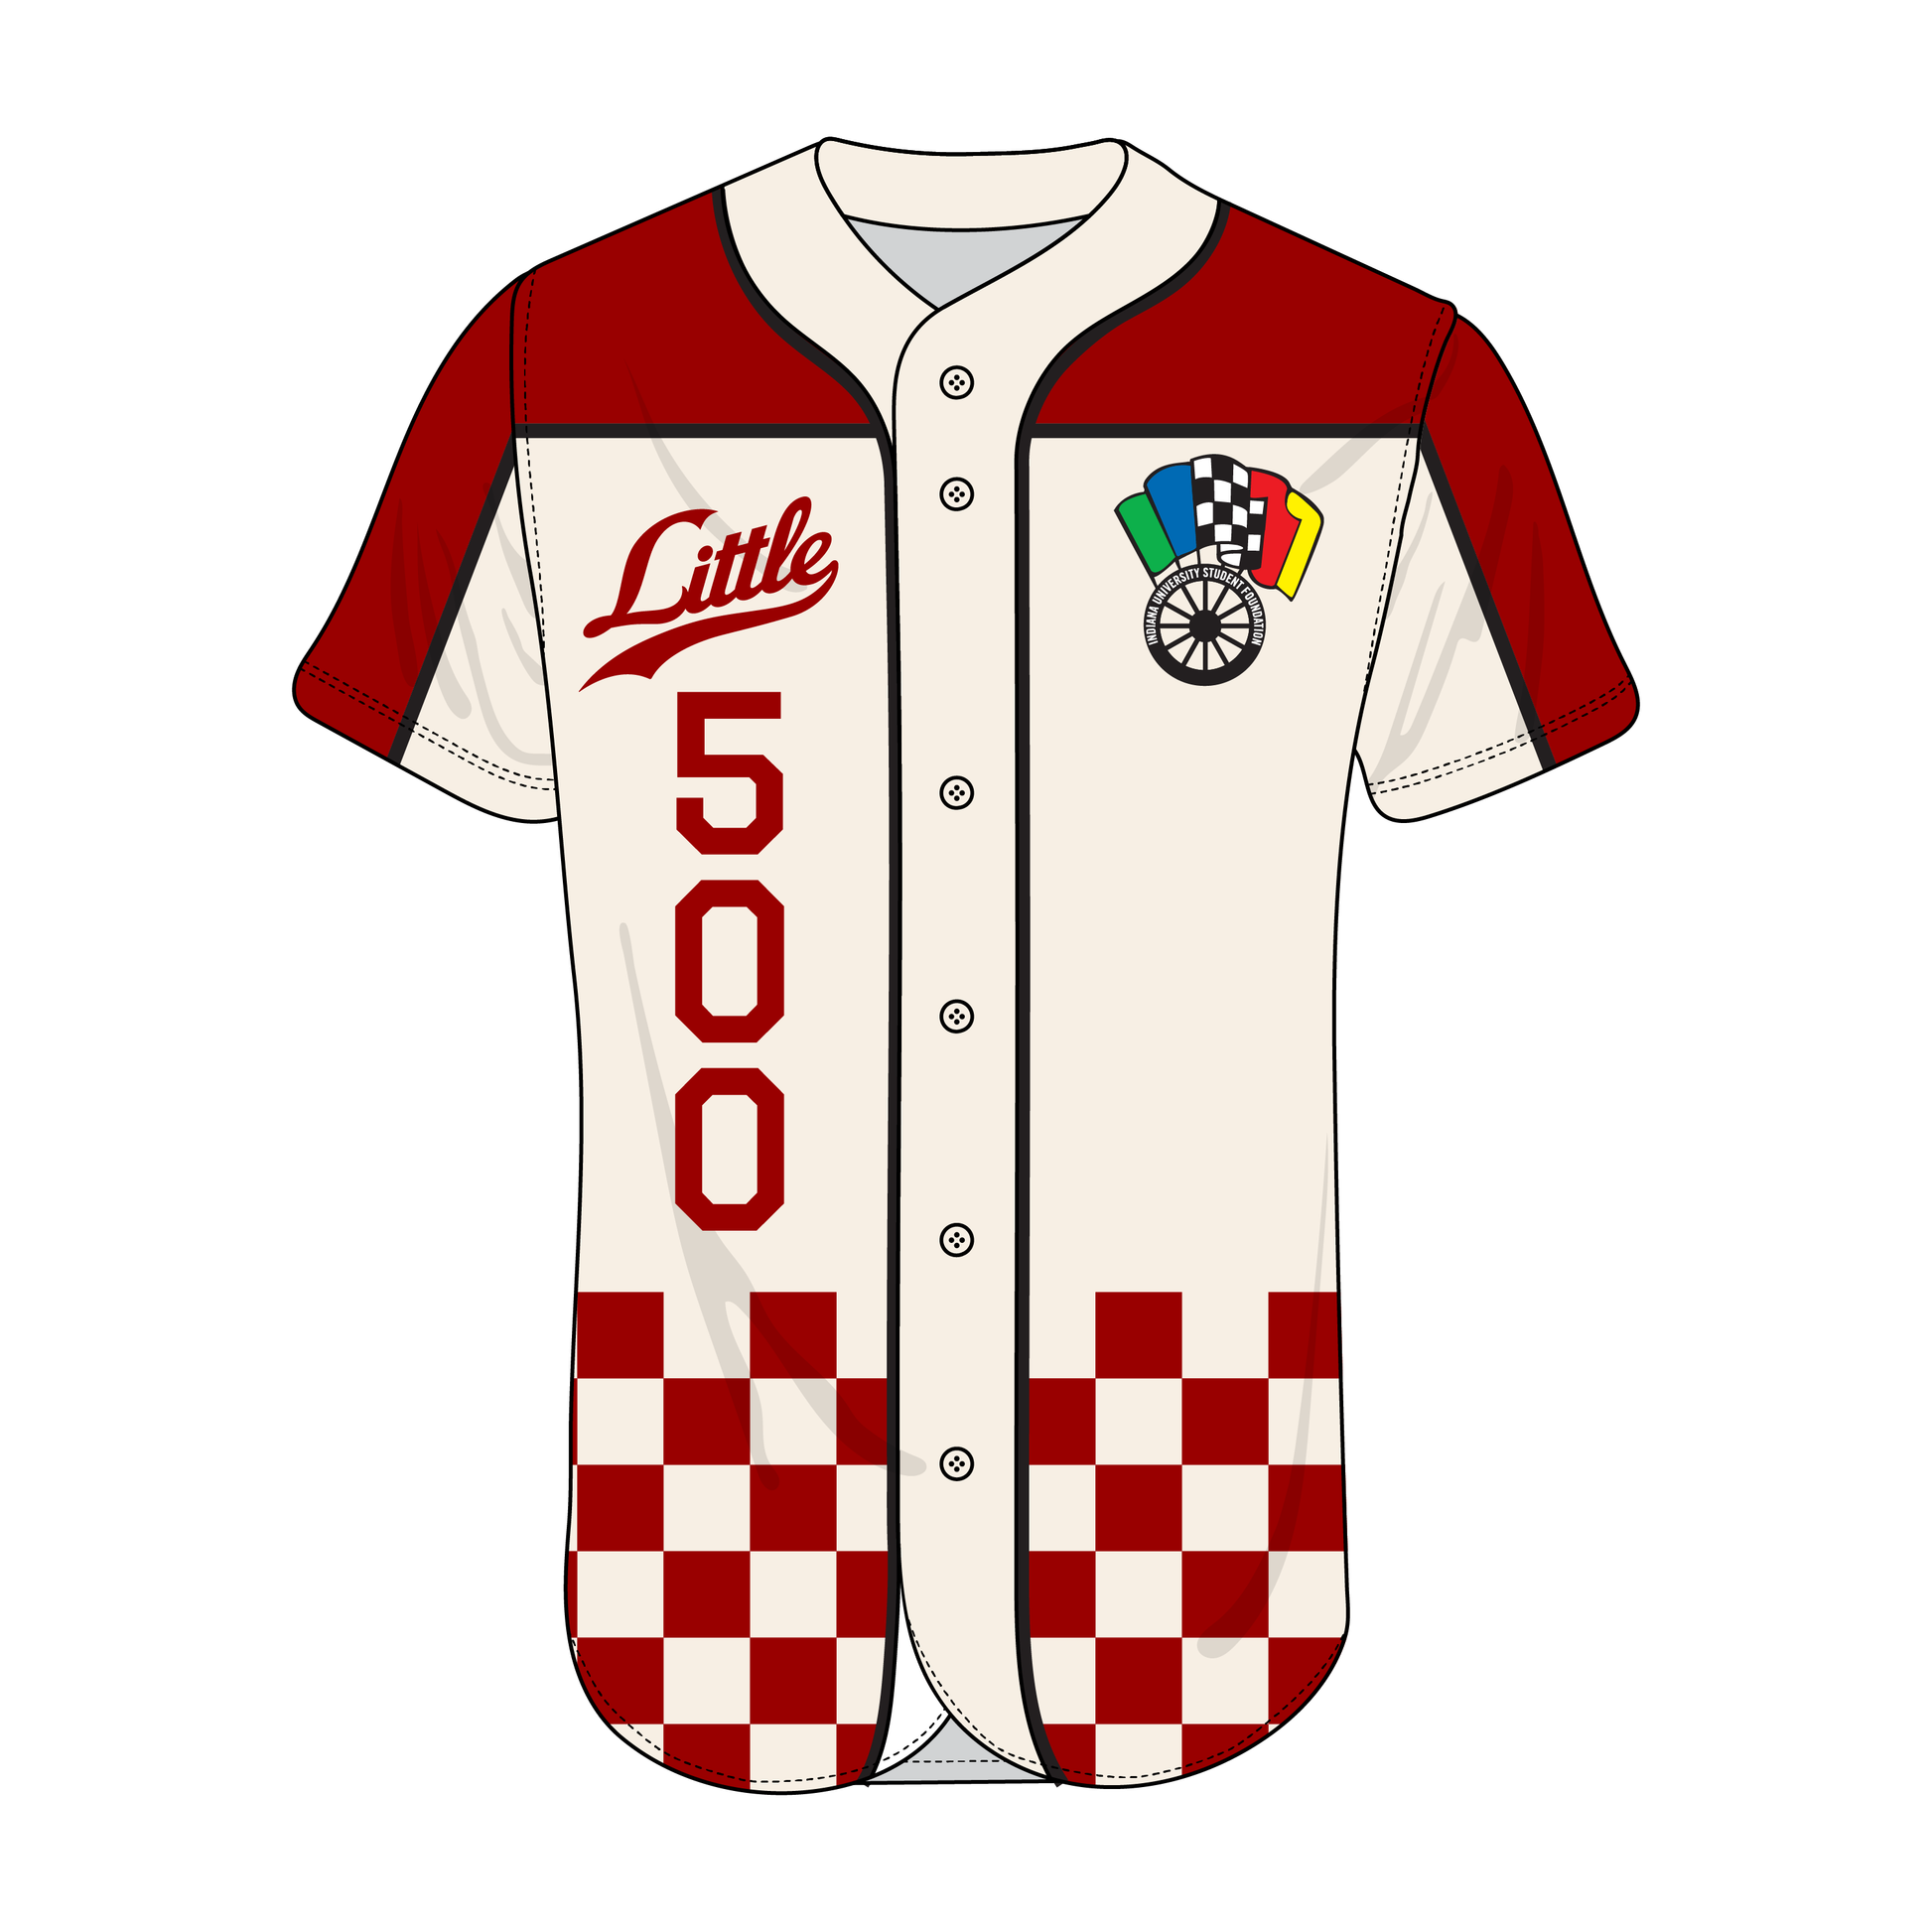 Little 500 Checkerboard Baseball Jersey Custom / X-Large